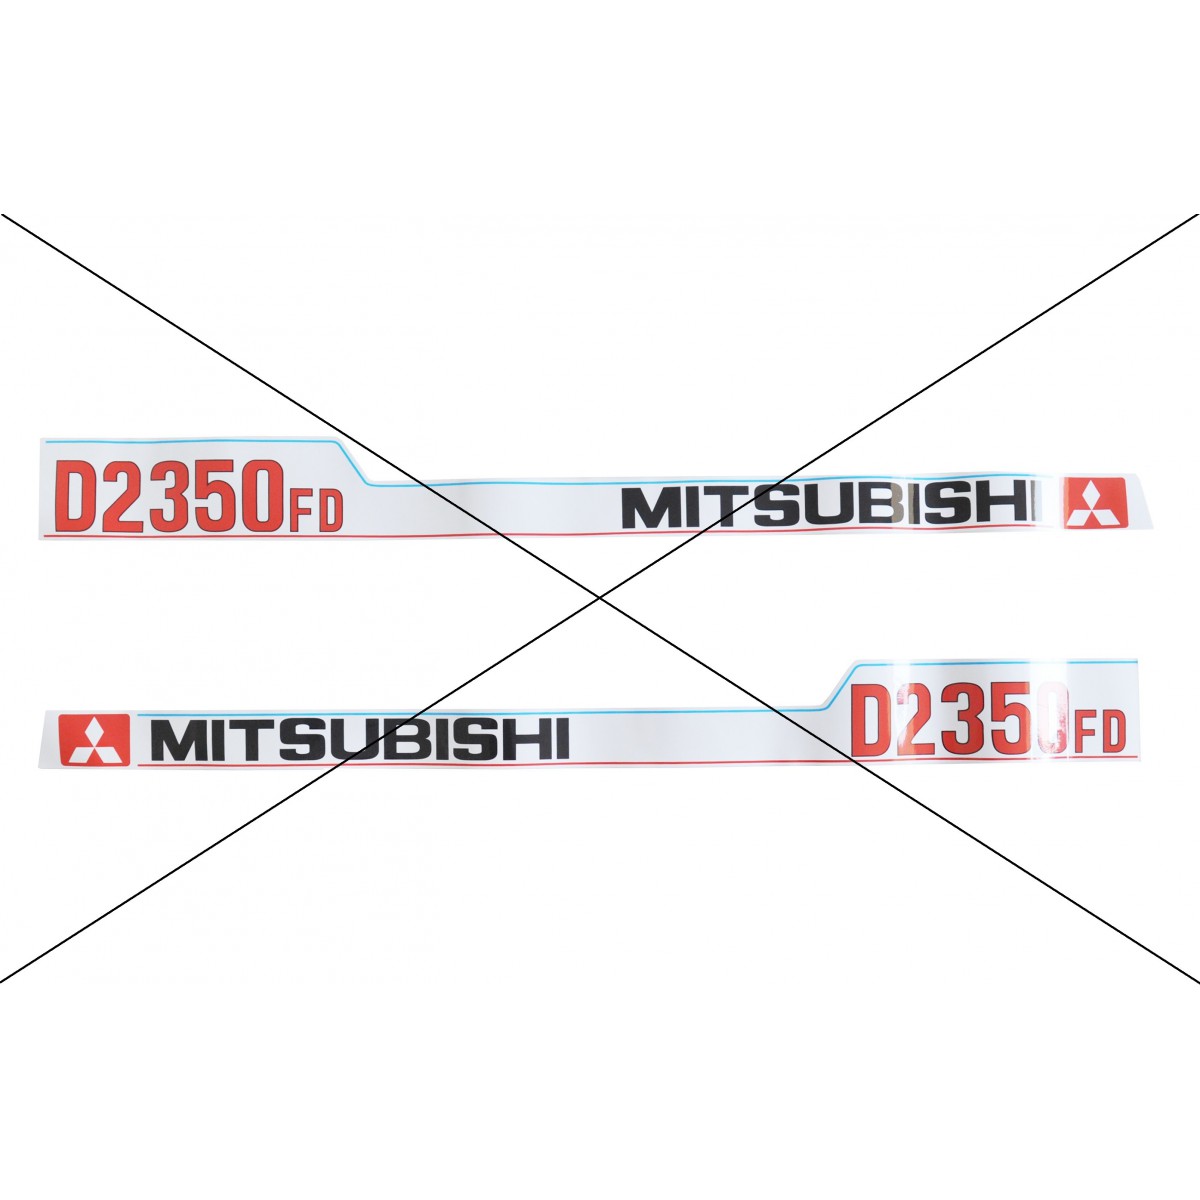 Mitsubishi D2350FD decals sticker